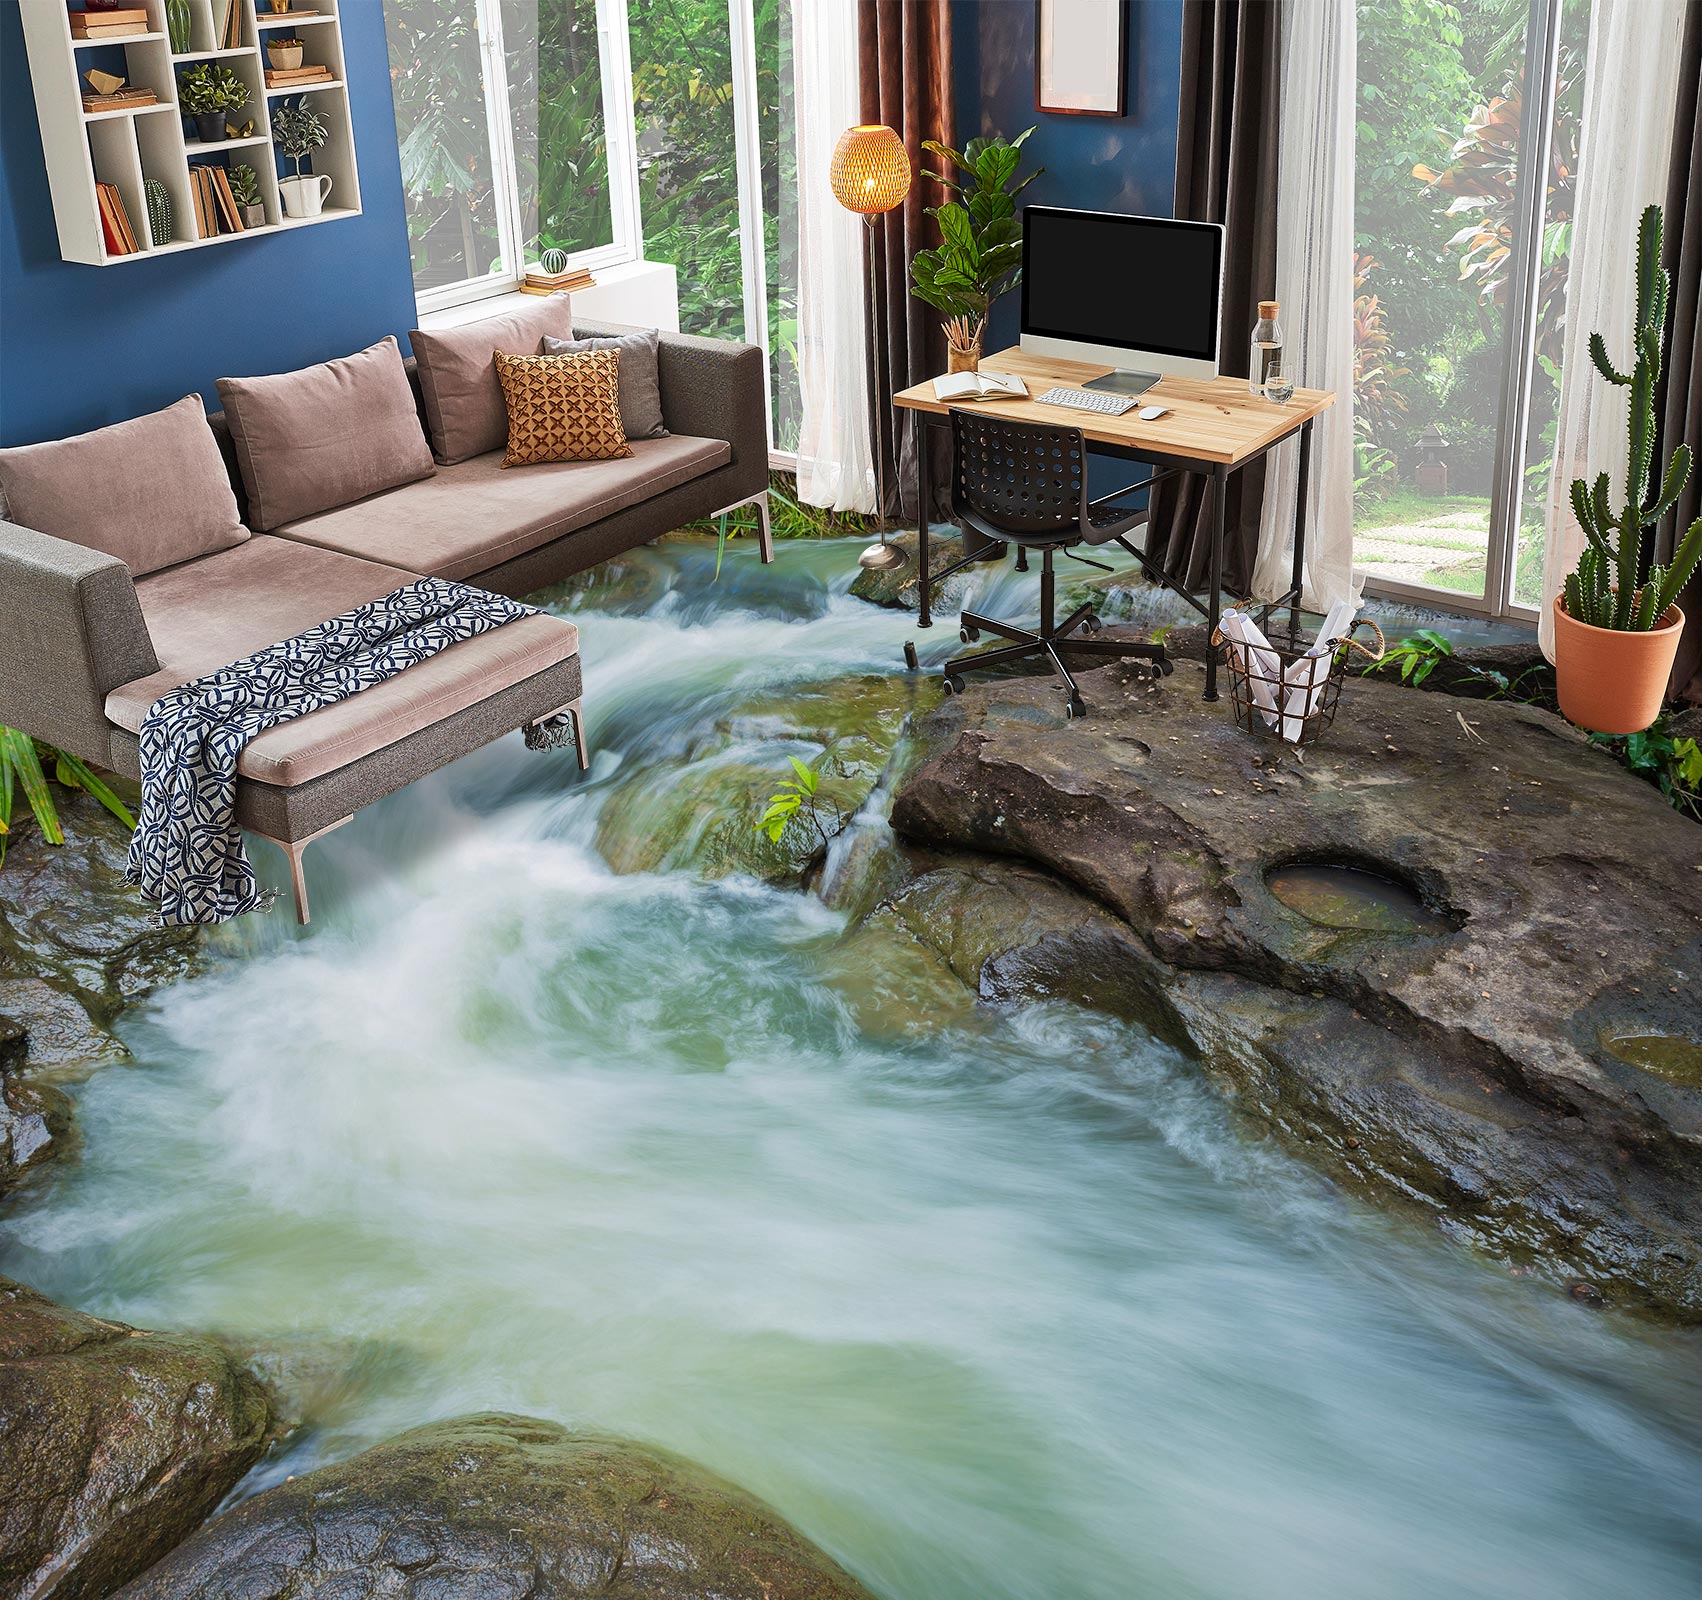 3D Nature's Green River 1026 Floor Mural  Wallpaper Murals Self-Adhesive Removable Print Epoxy